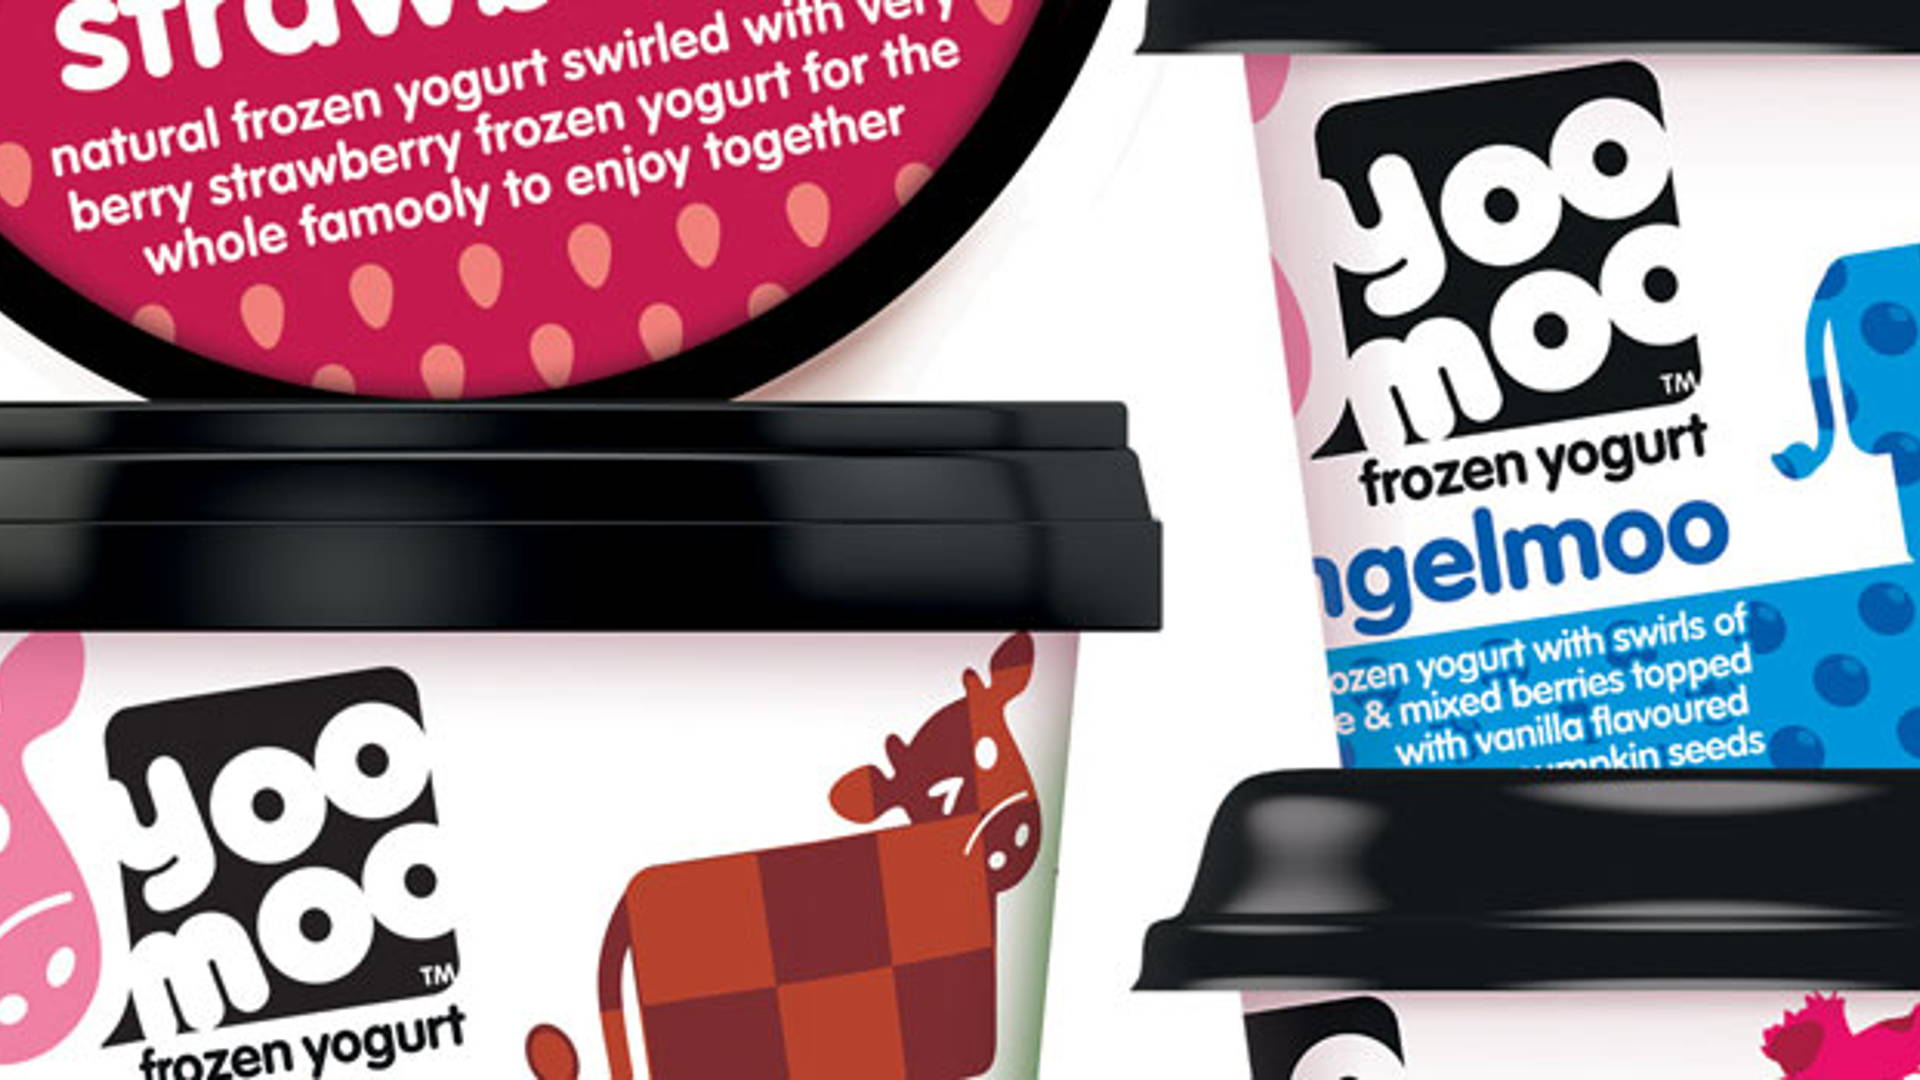 Featured image for Yoomoo Frozen Yogurt